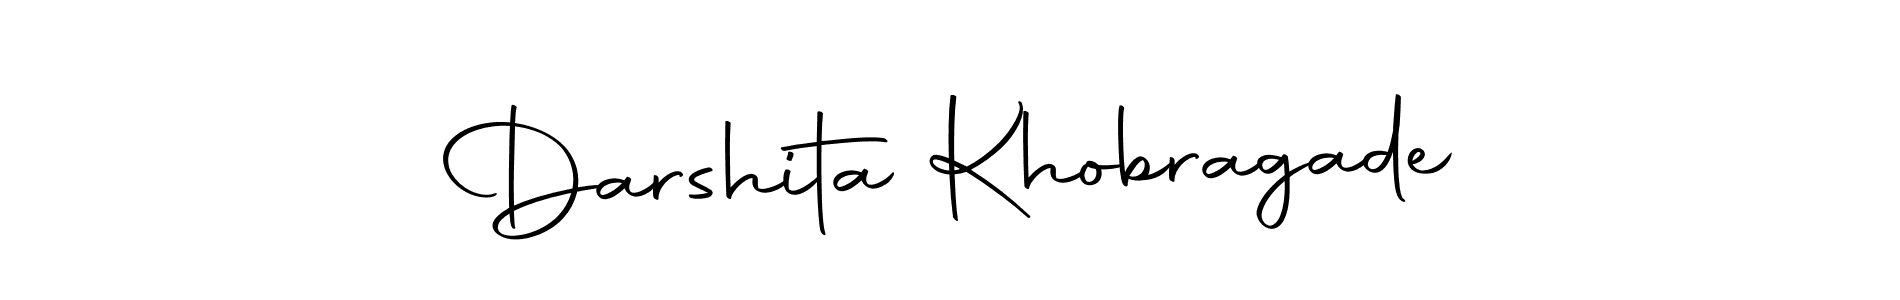 How to Draw Darshita Khobragade signature style? Autography-DOLnW is a latest design signature styles for name Darshita Khobragade. Darshita Khobragade signature style 10 images and pictures png